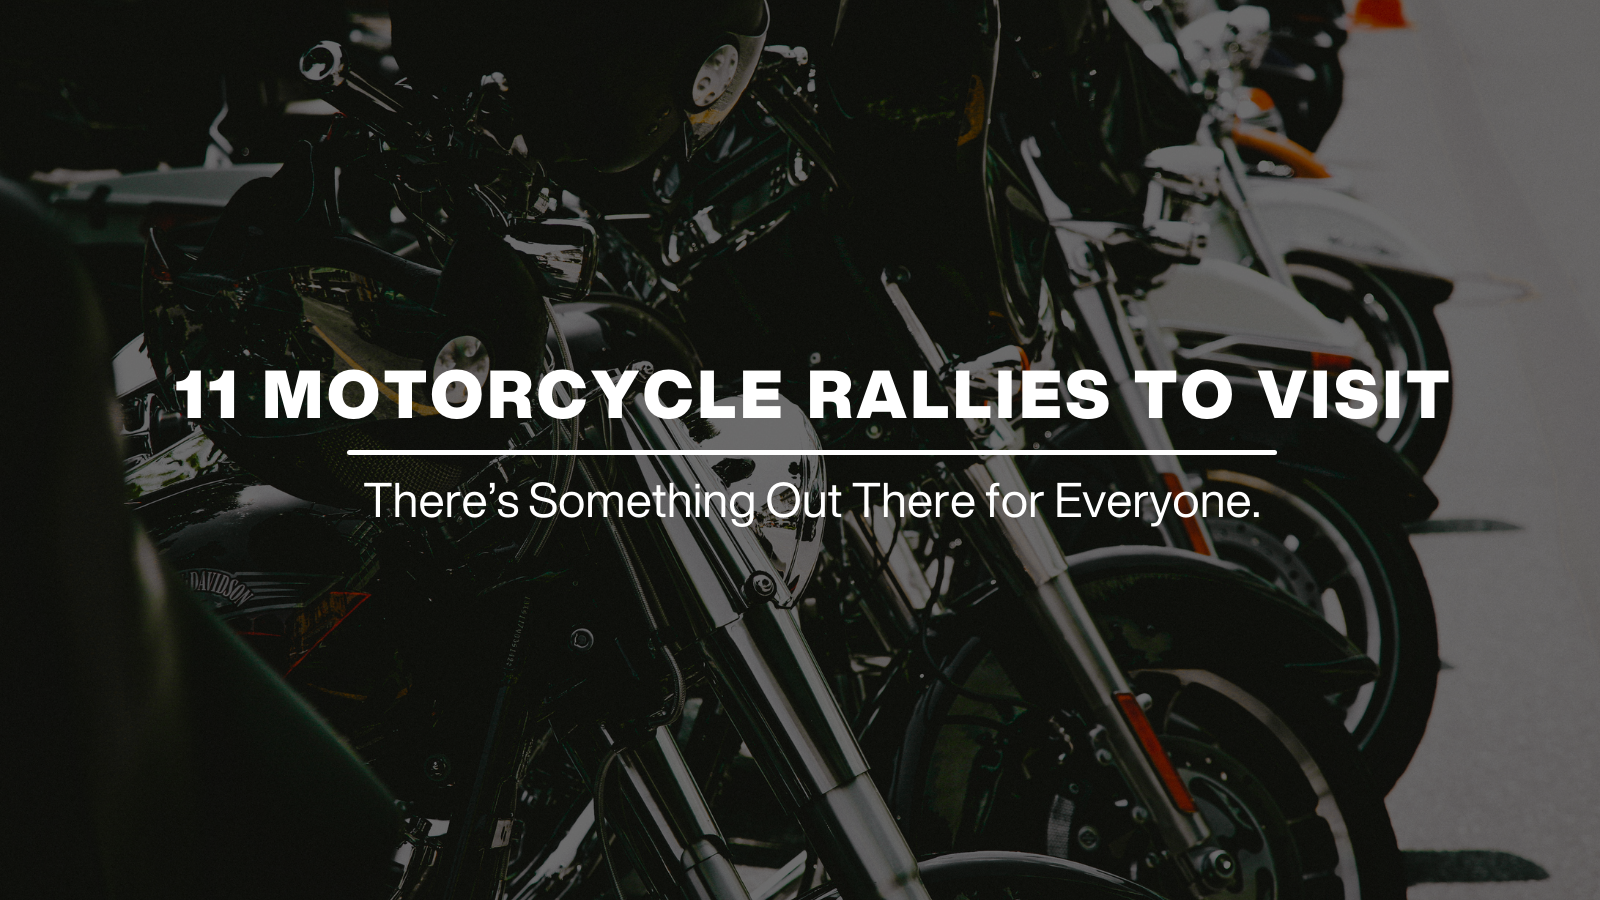 11 Motorcycle rallies